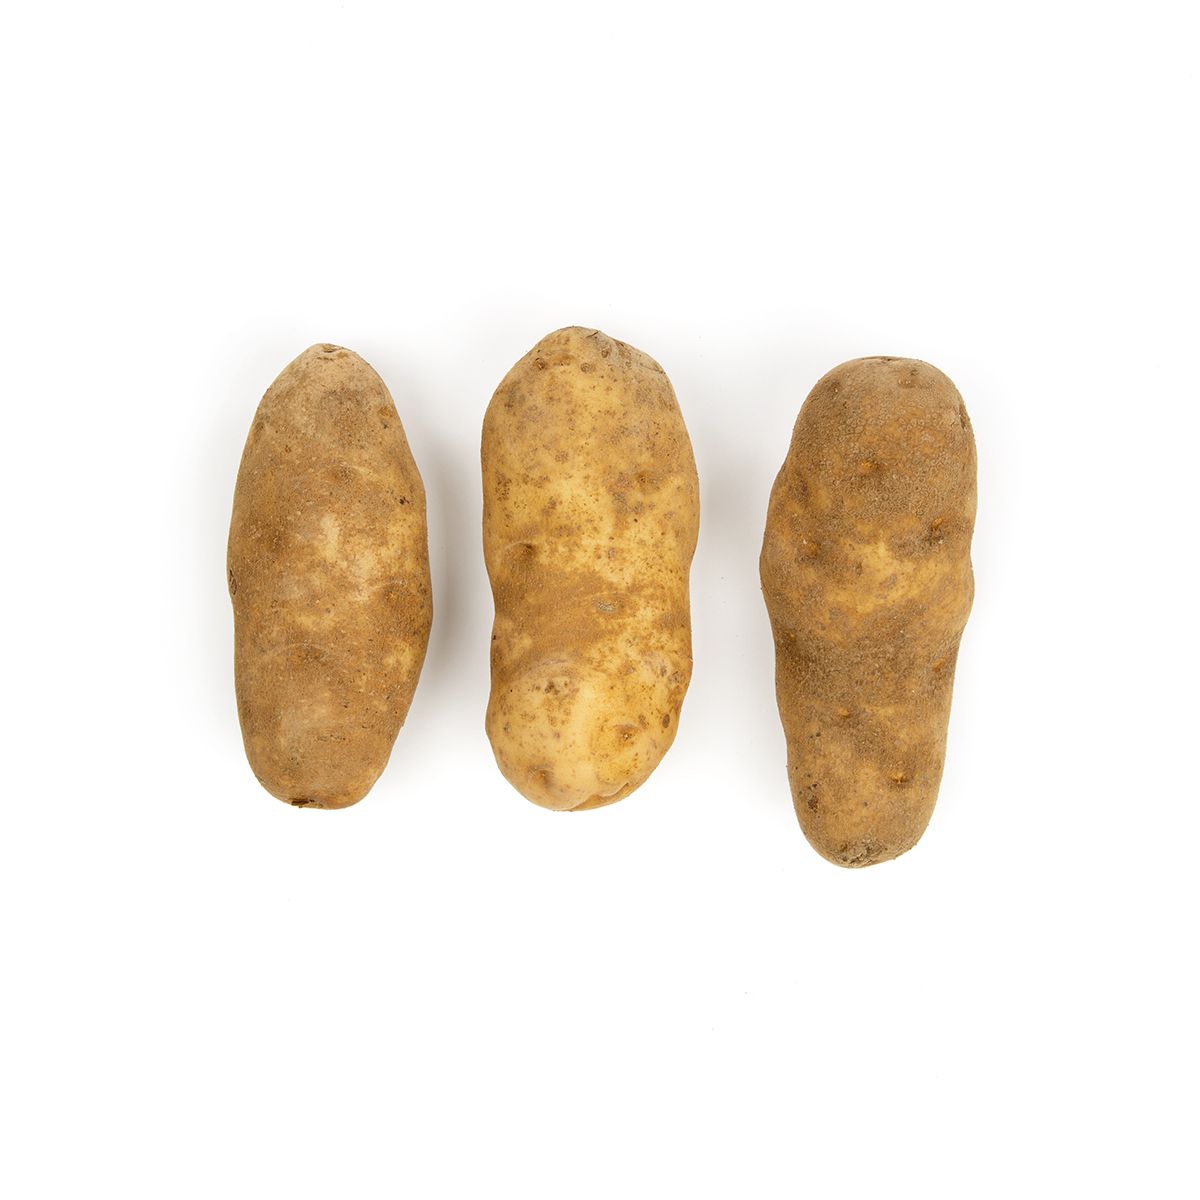 Potatoes Of Idaho GPOD Potatoes 50 CT